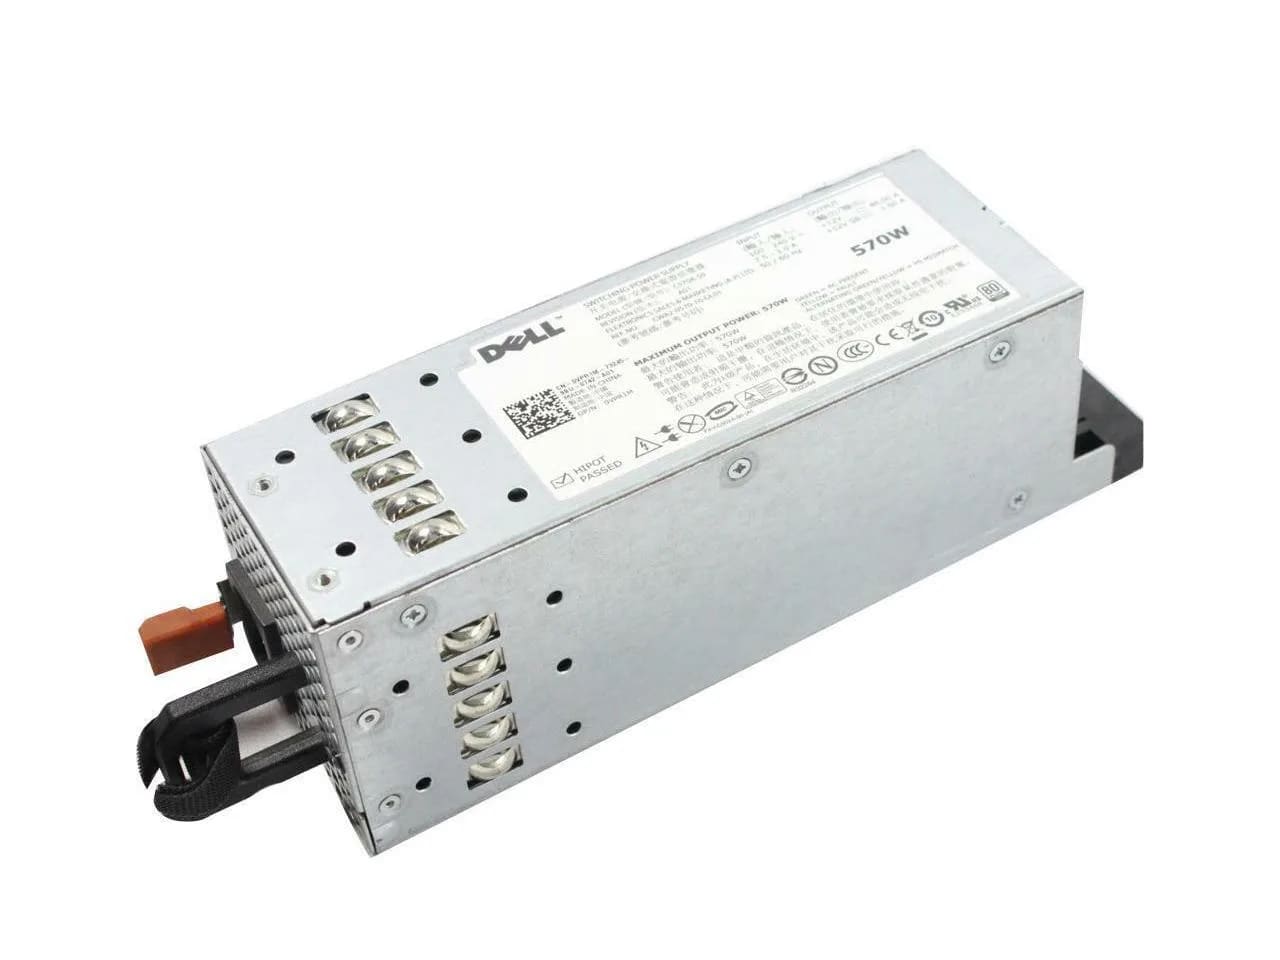 Dell PowerEdge R710 570W PSU - 0VPR1M